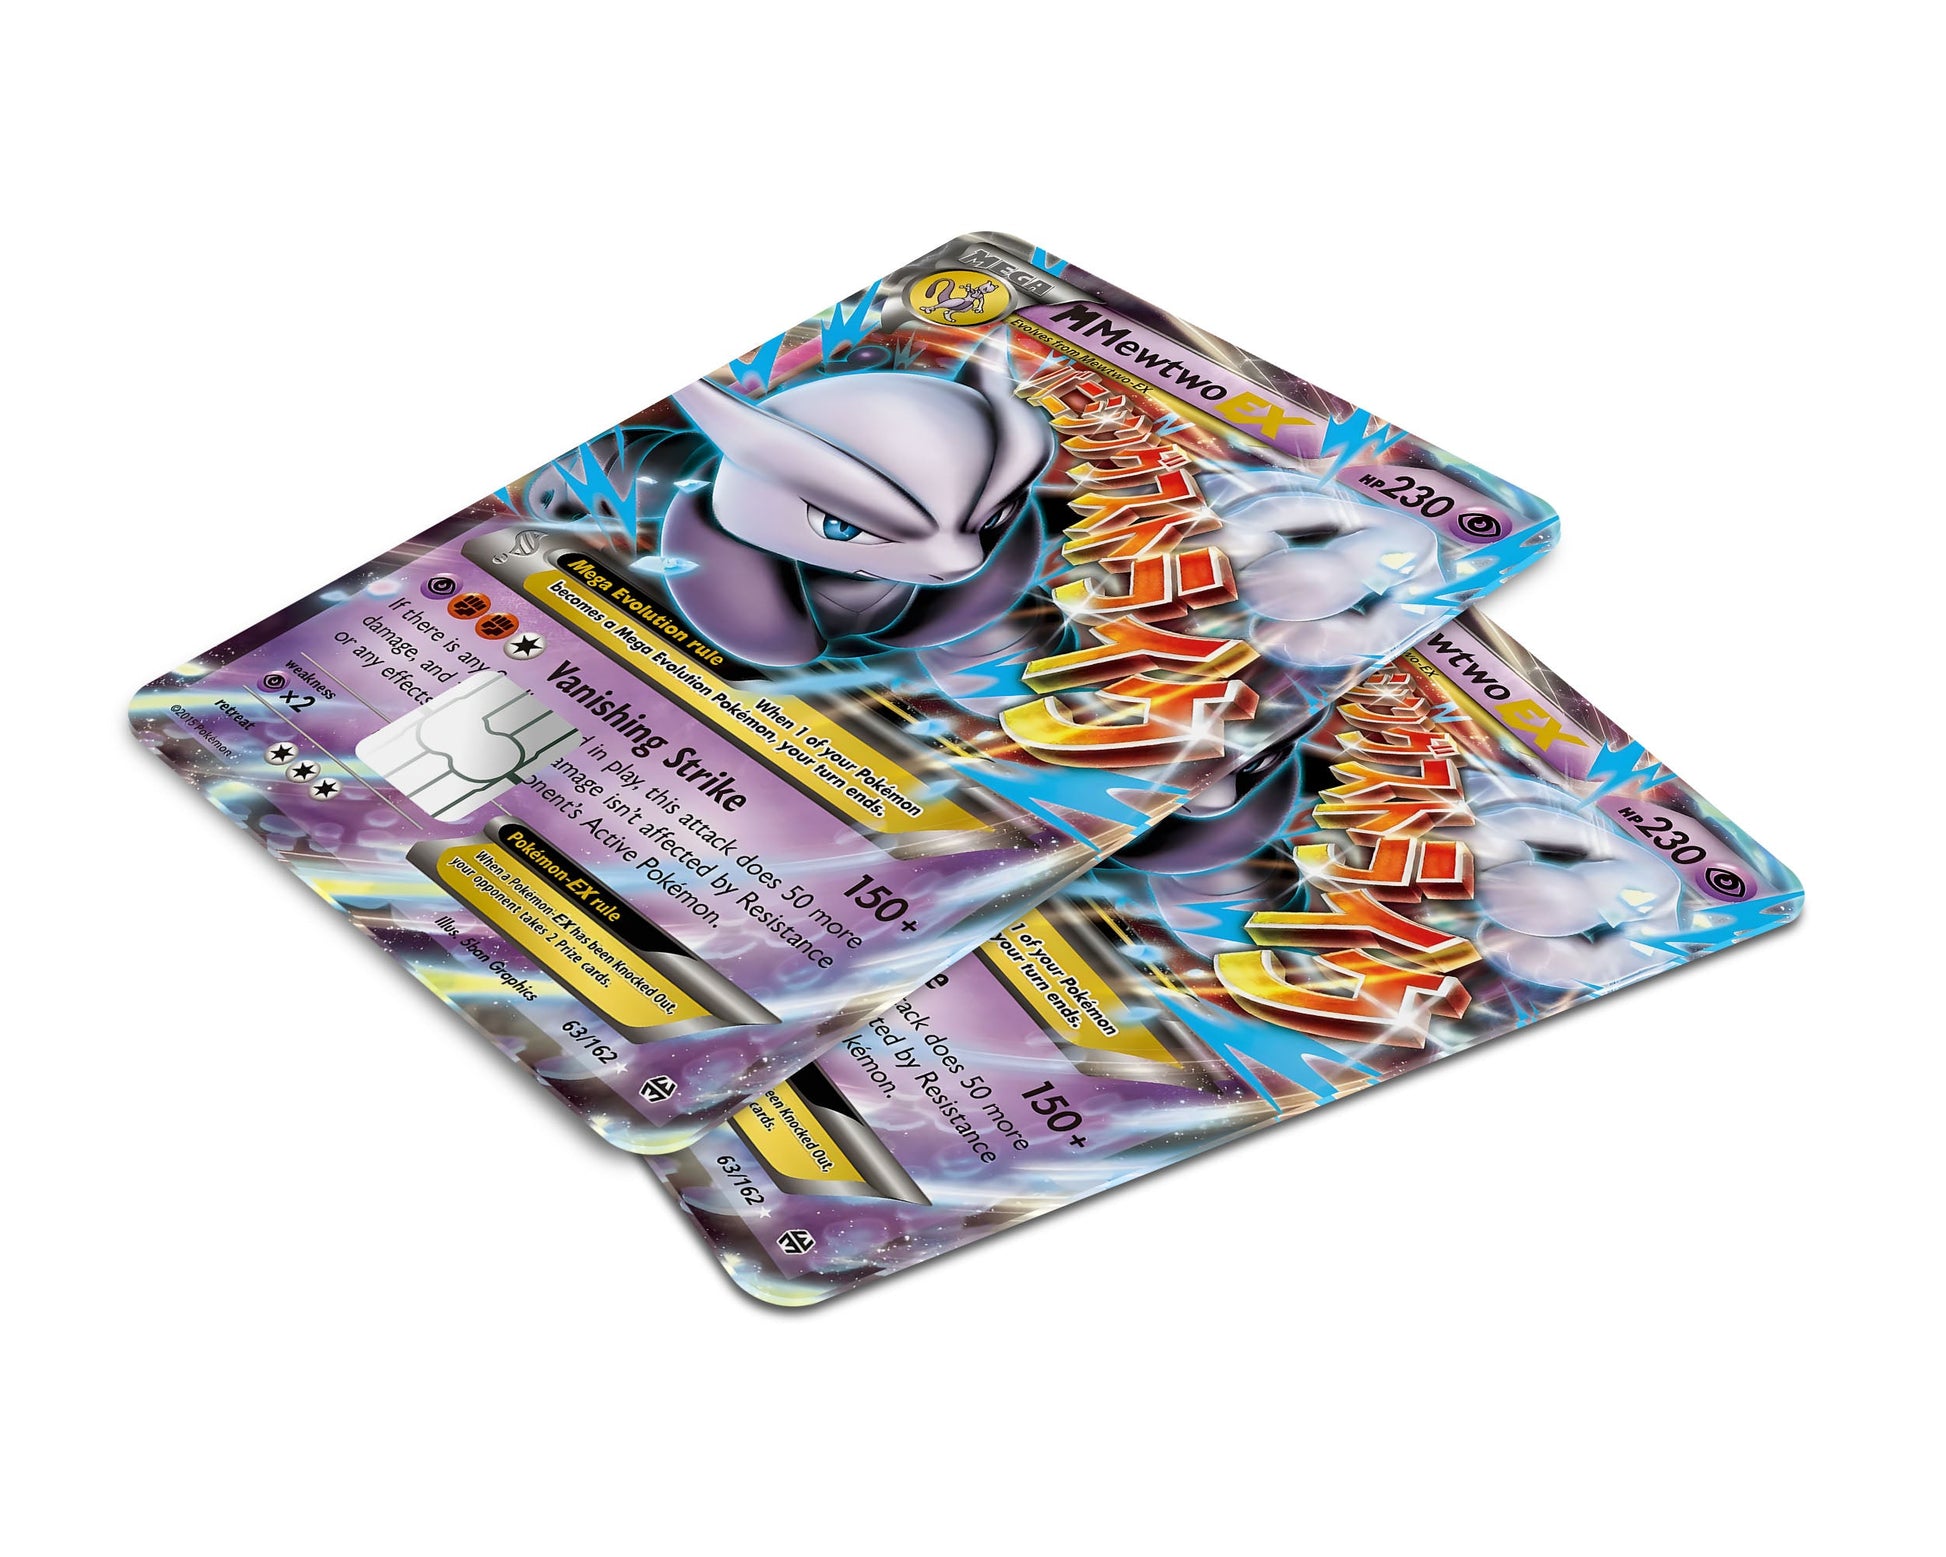 M Mewtwo X Ex Pokemon Card 